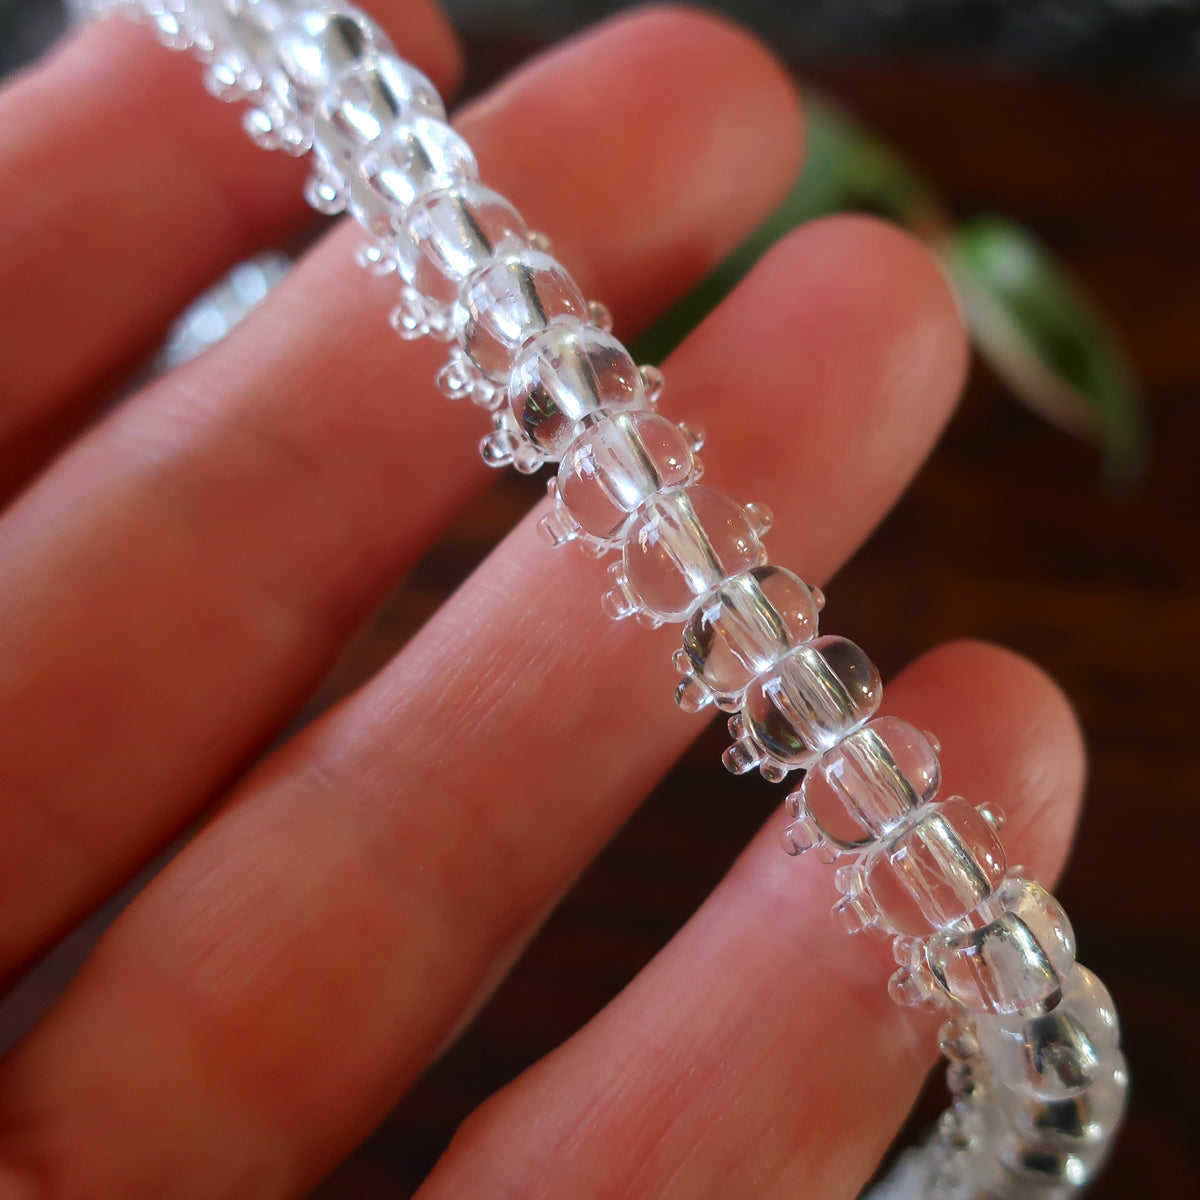 Temple Tree Bohemian Glass Bead Caterpillar Weave Bracelet - Crystal